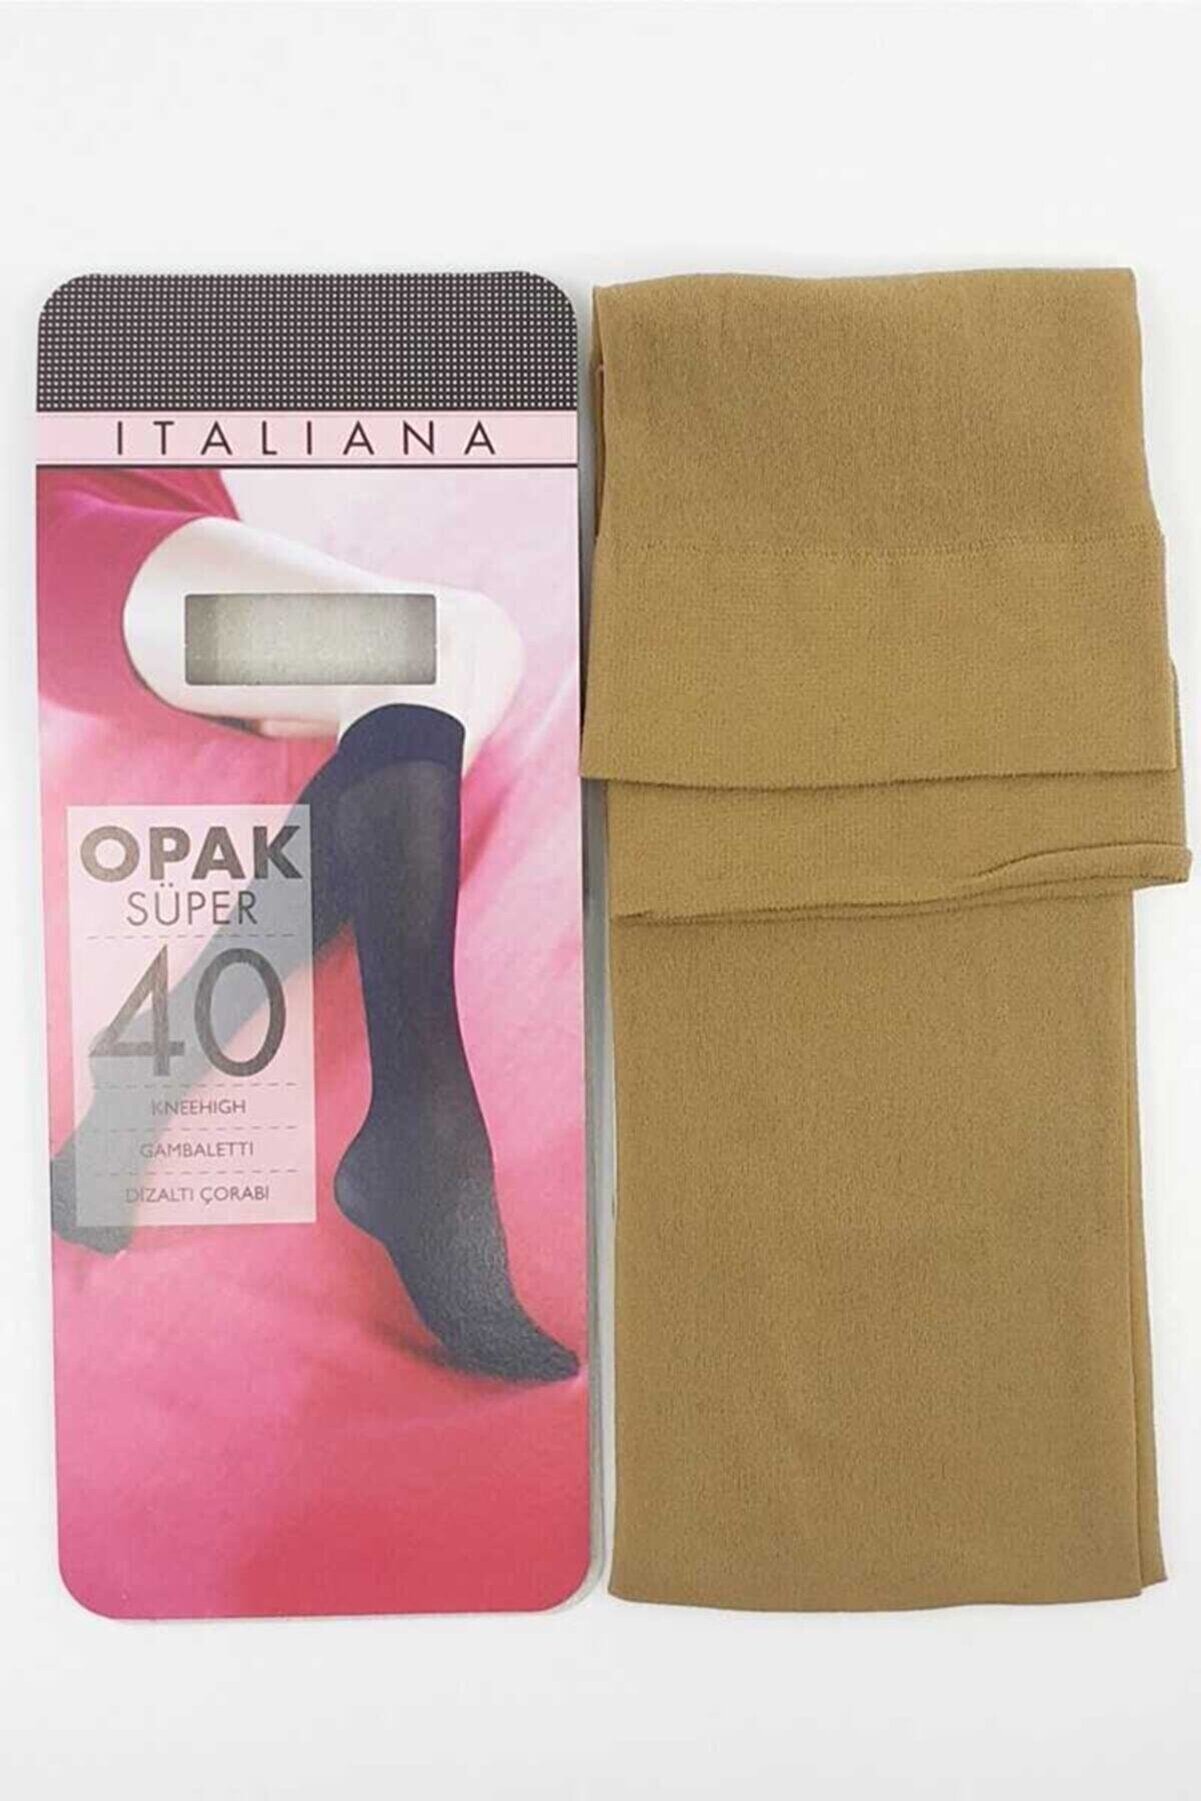 İTALİANA Opak Süper 40 Dizaltı 4 Adet Ten Rengi Çorap